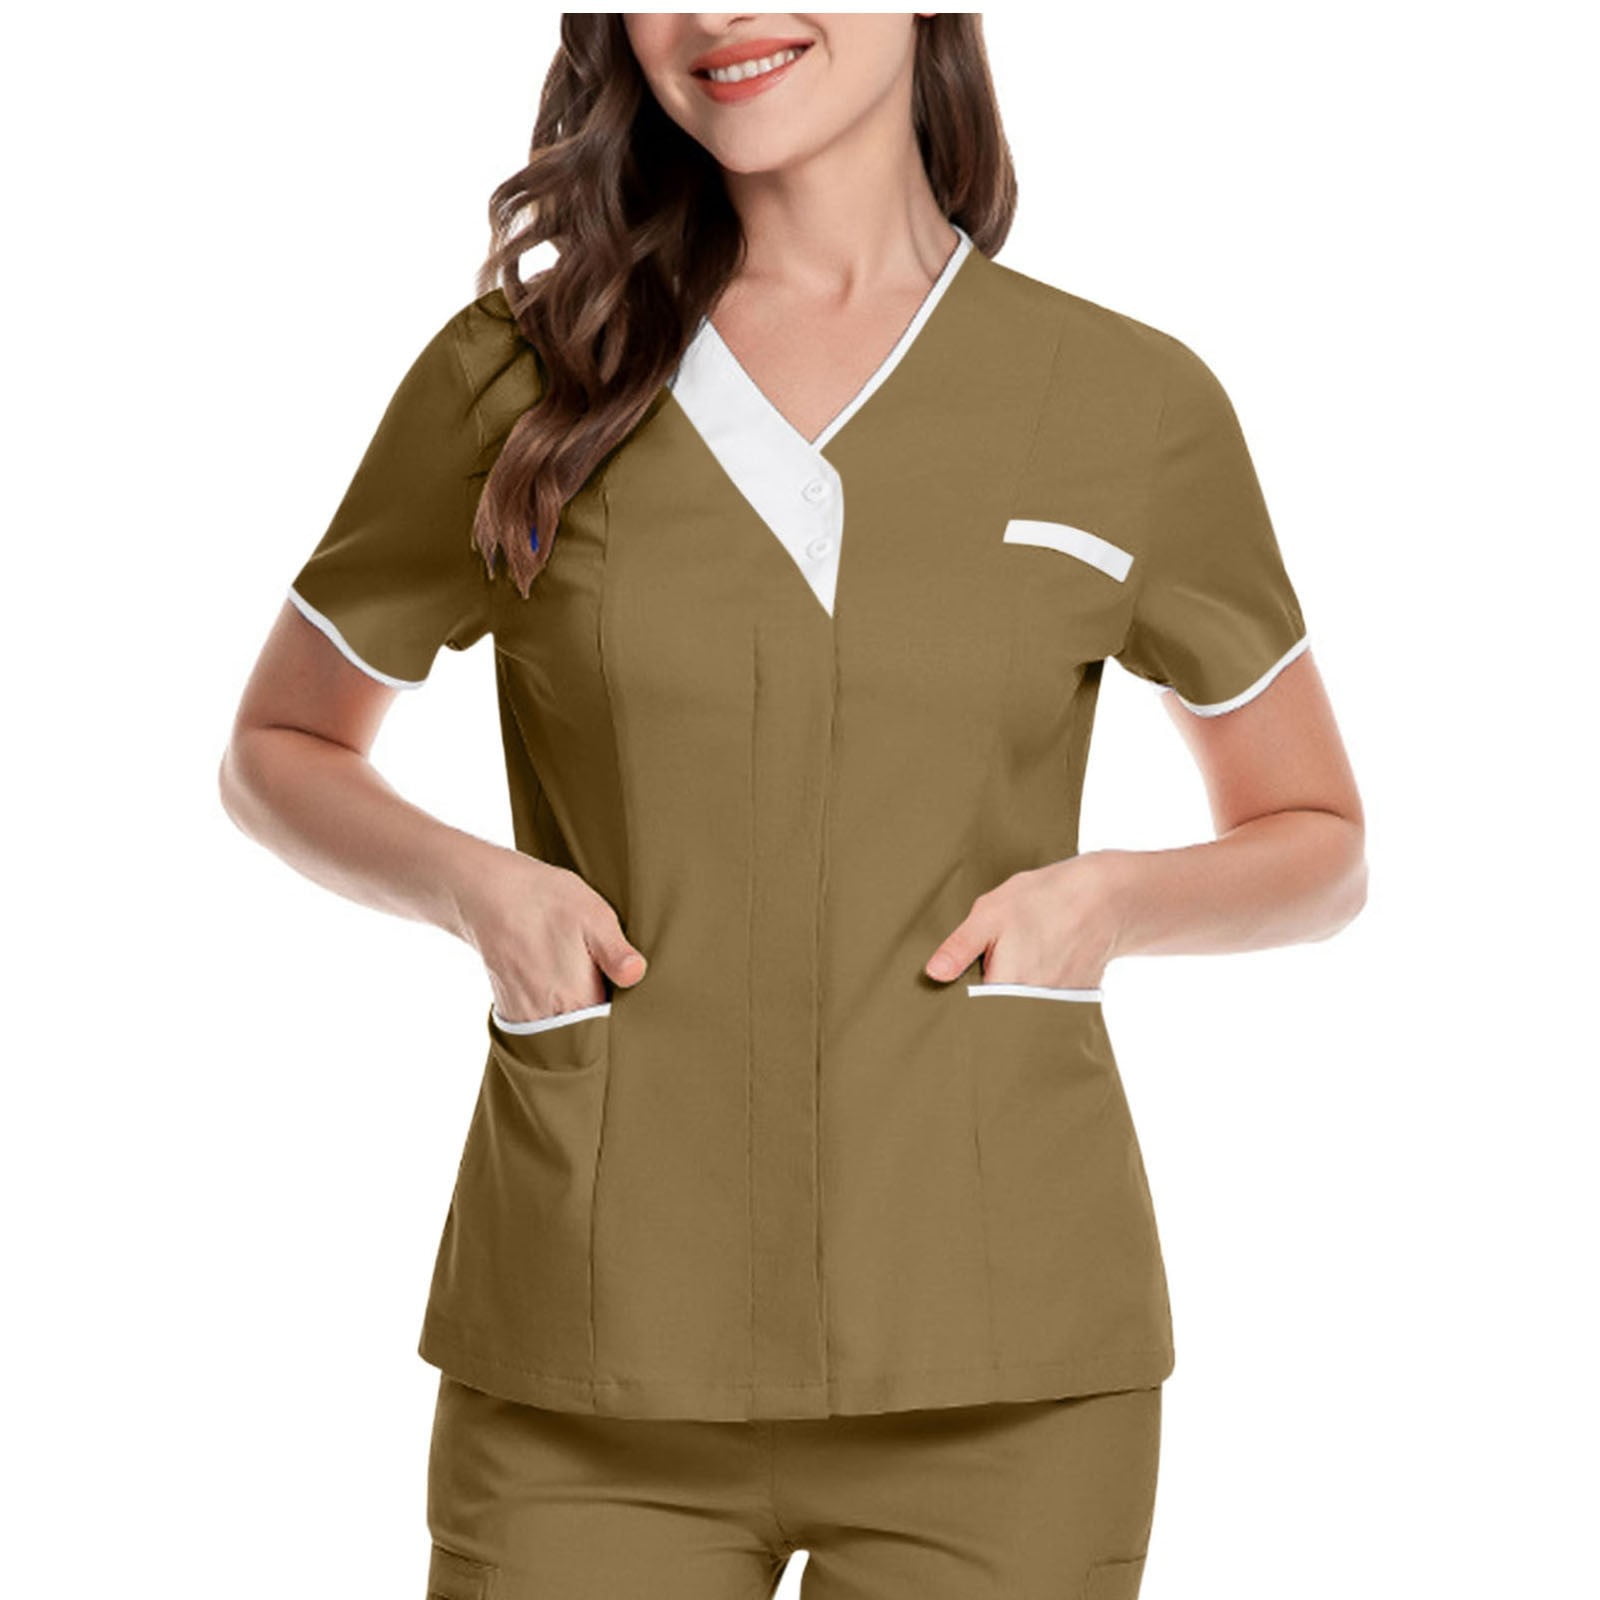 Sksloeg Womens Scrub Top 4 Way Stretch 2 Pocket Button Top with Jogger Tops  Nursing Short Sleeve Workwear,Khaki S 